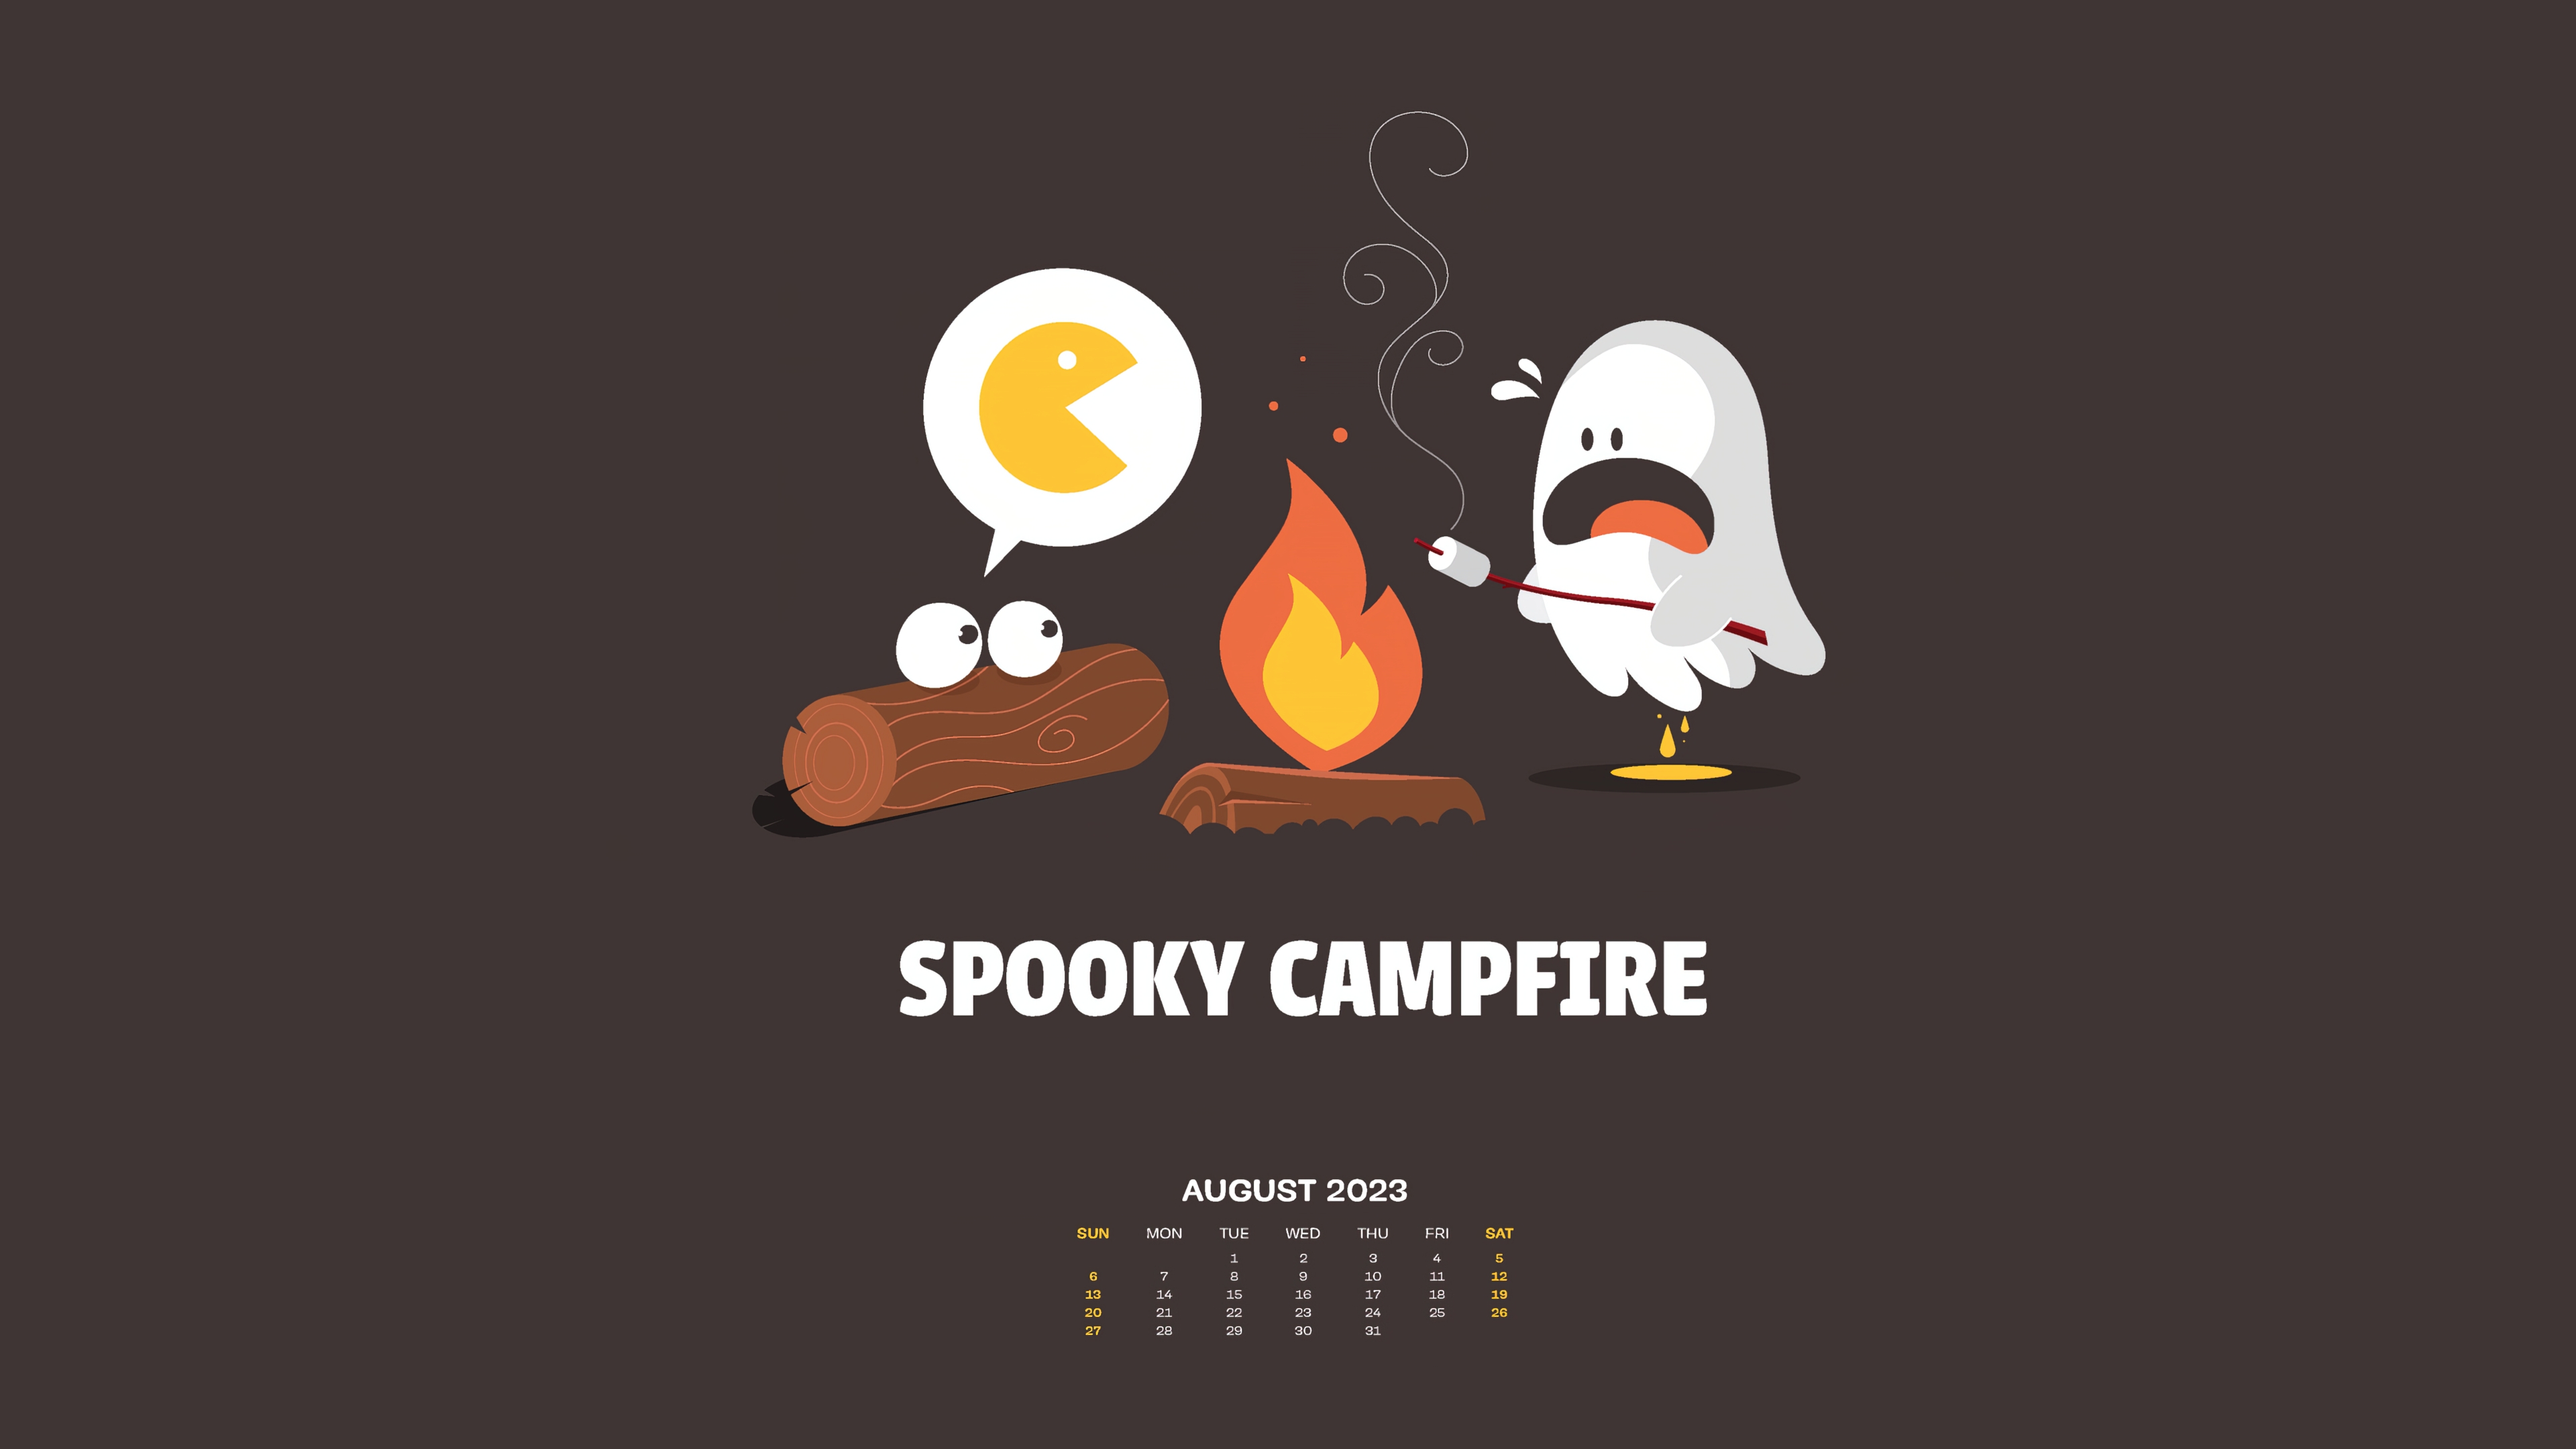 HD wallpaper, August Calendar, 2023, Campfire, Illustration, Spooky, Simple